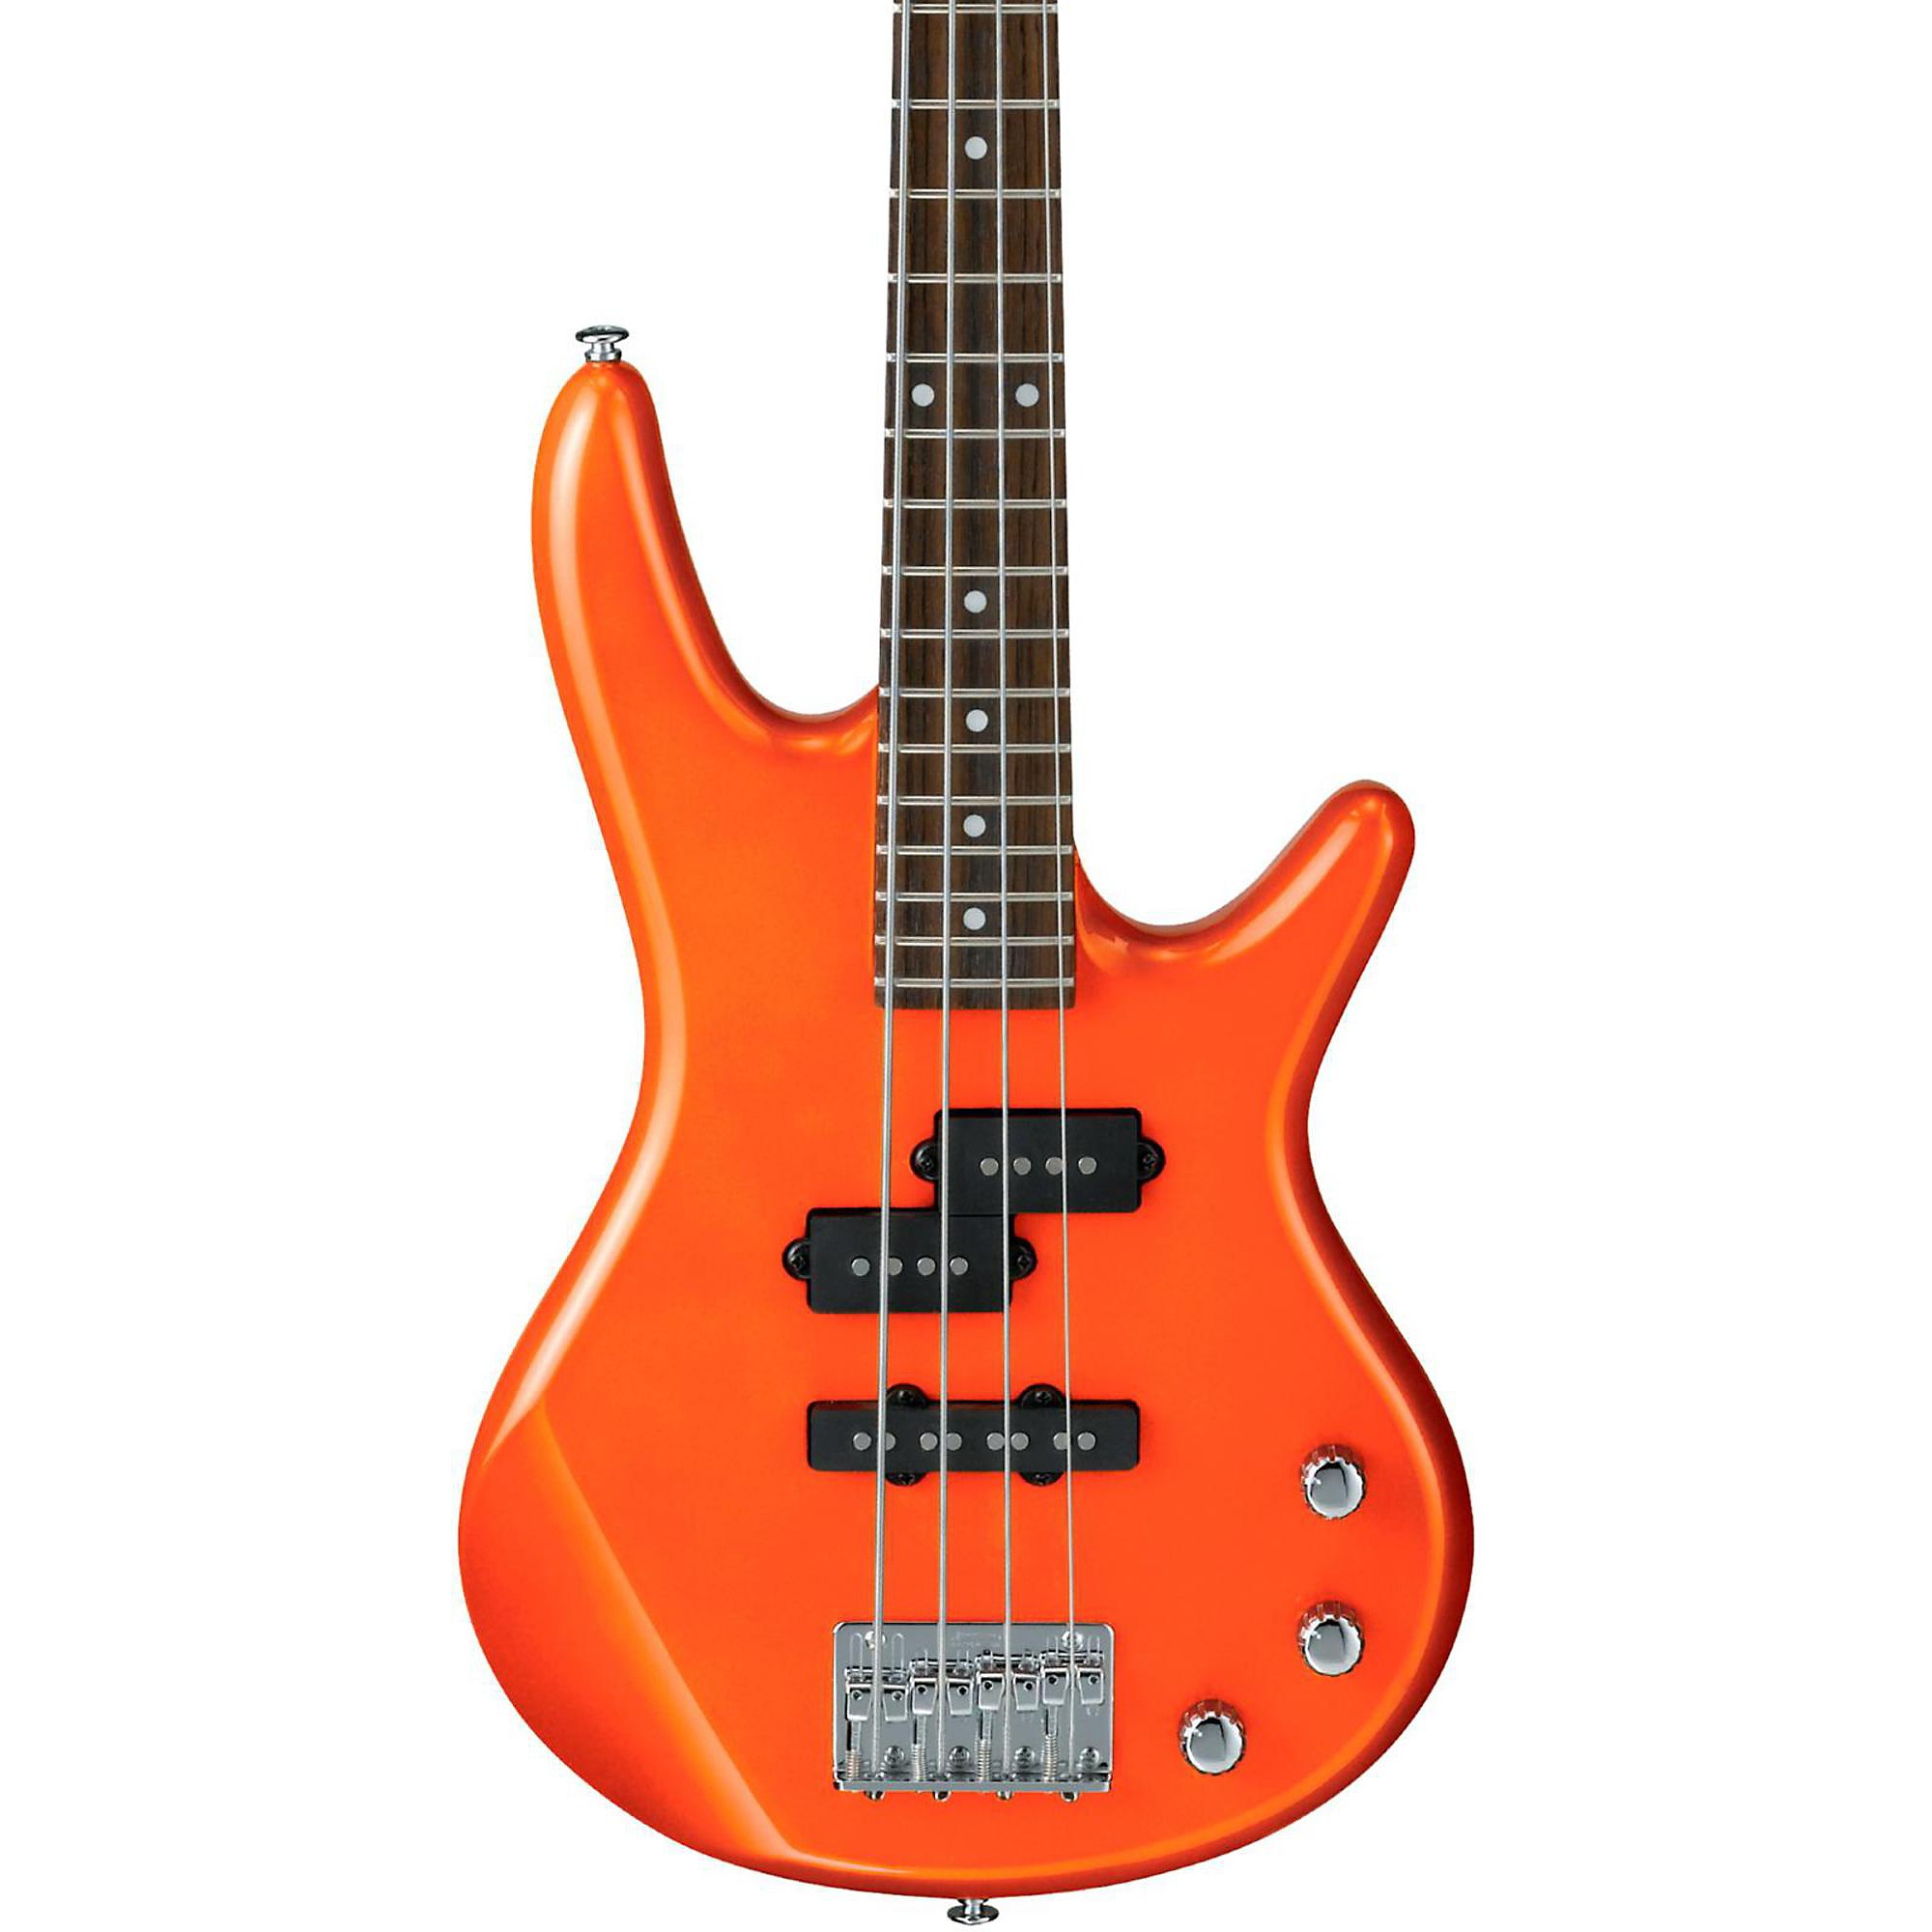 Бас-гитара Ibanez GSRM20 miKro с короткими мензурами, родстер, оранжевый металлик цена и фото